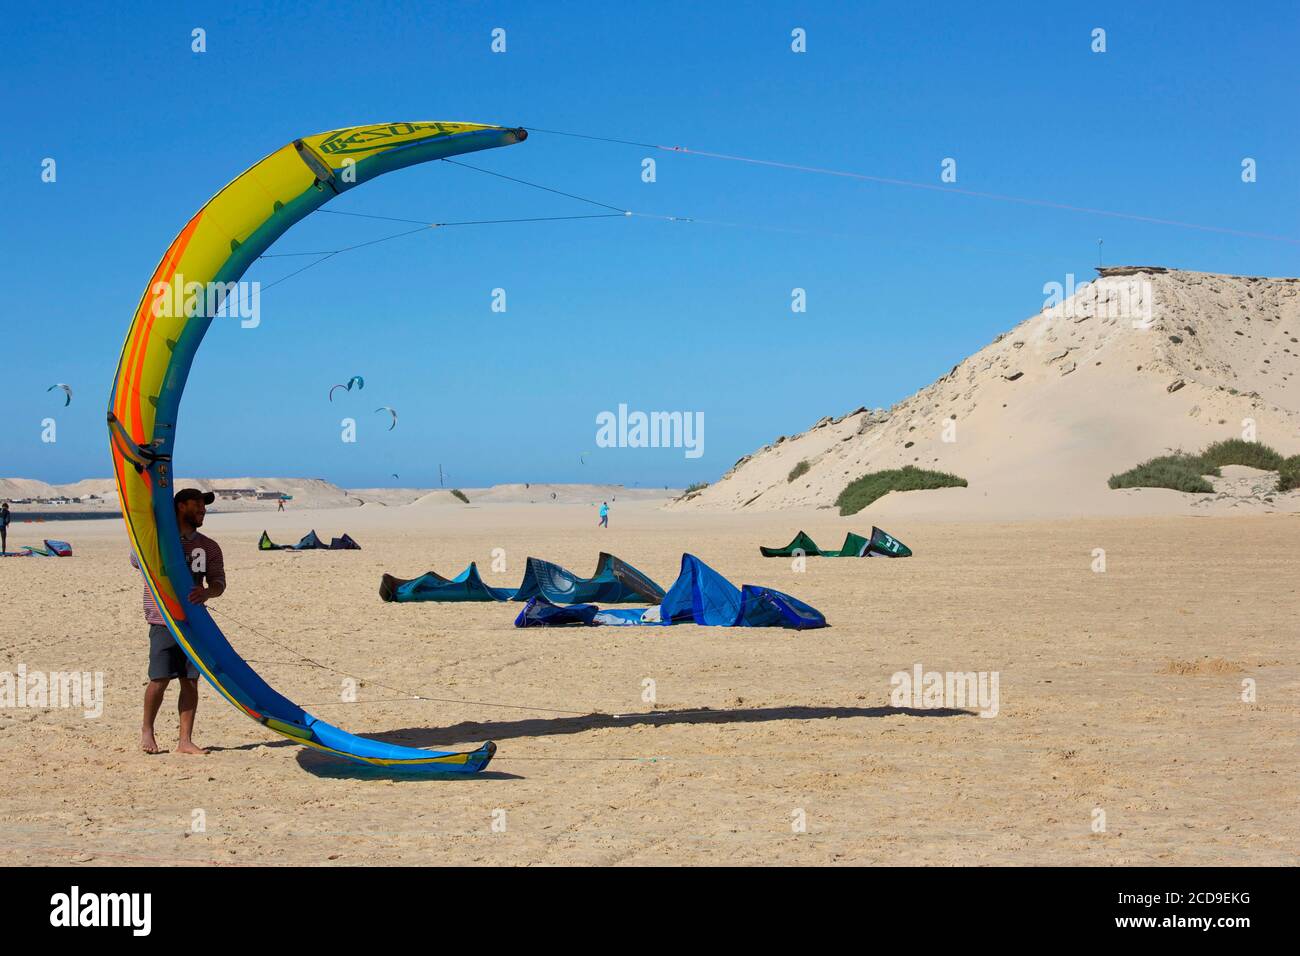 Morocco, Western Sahara, Dakhla, kitesurfer holding his sail on the beach of Dakhla Attitude kitesurf camp Stock Photo